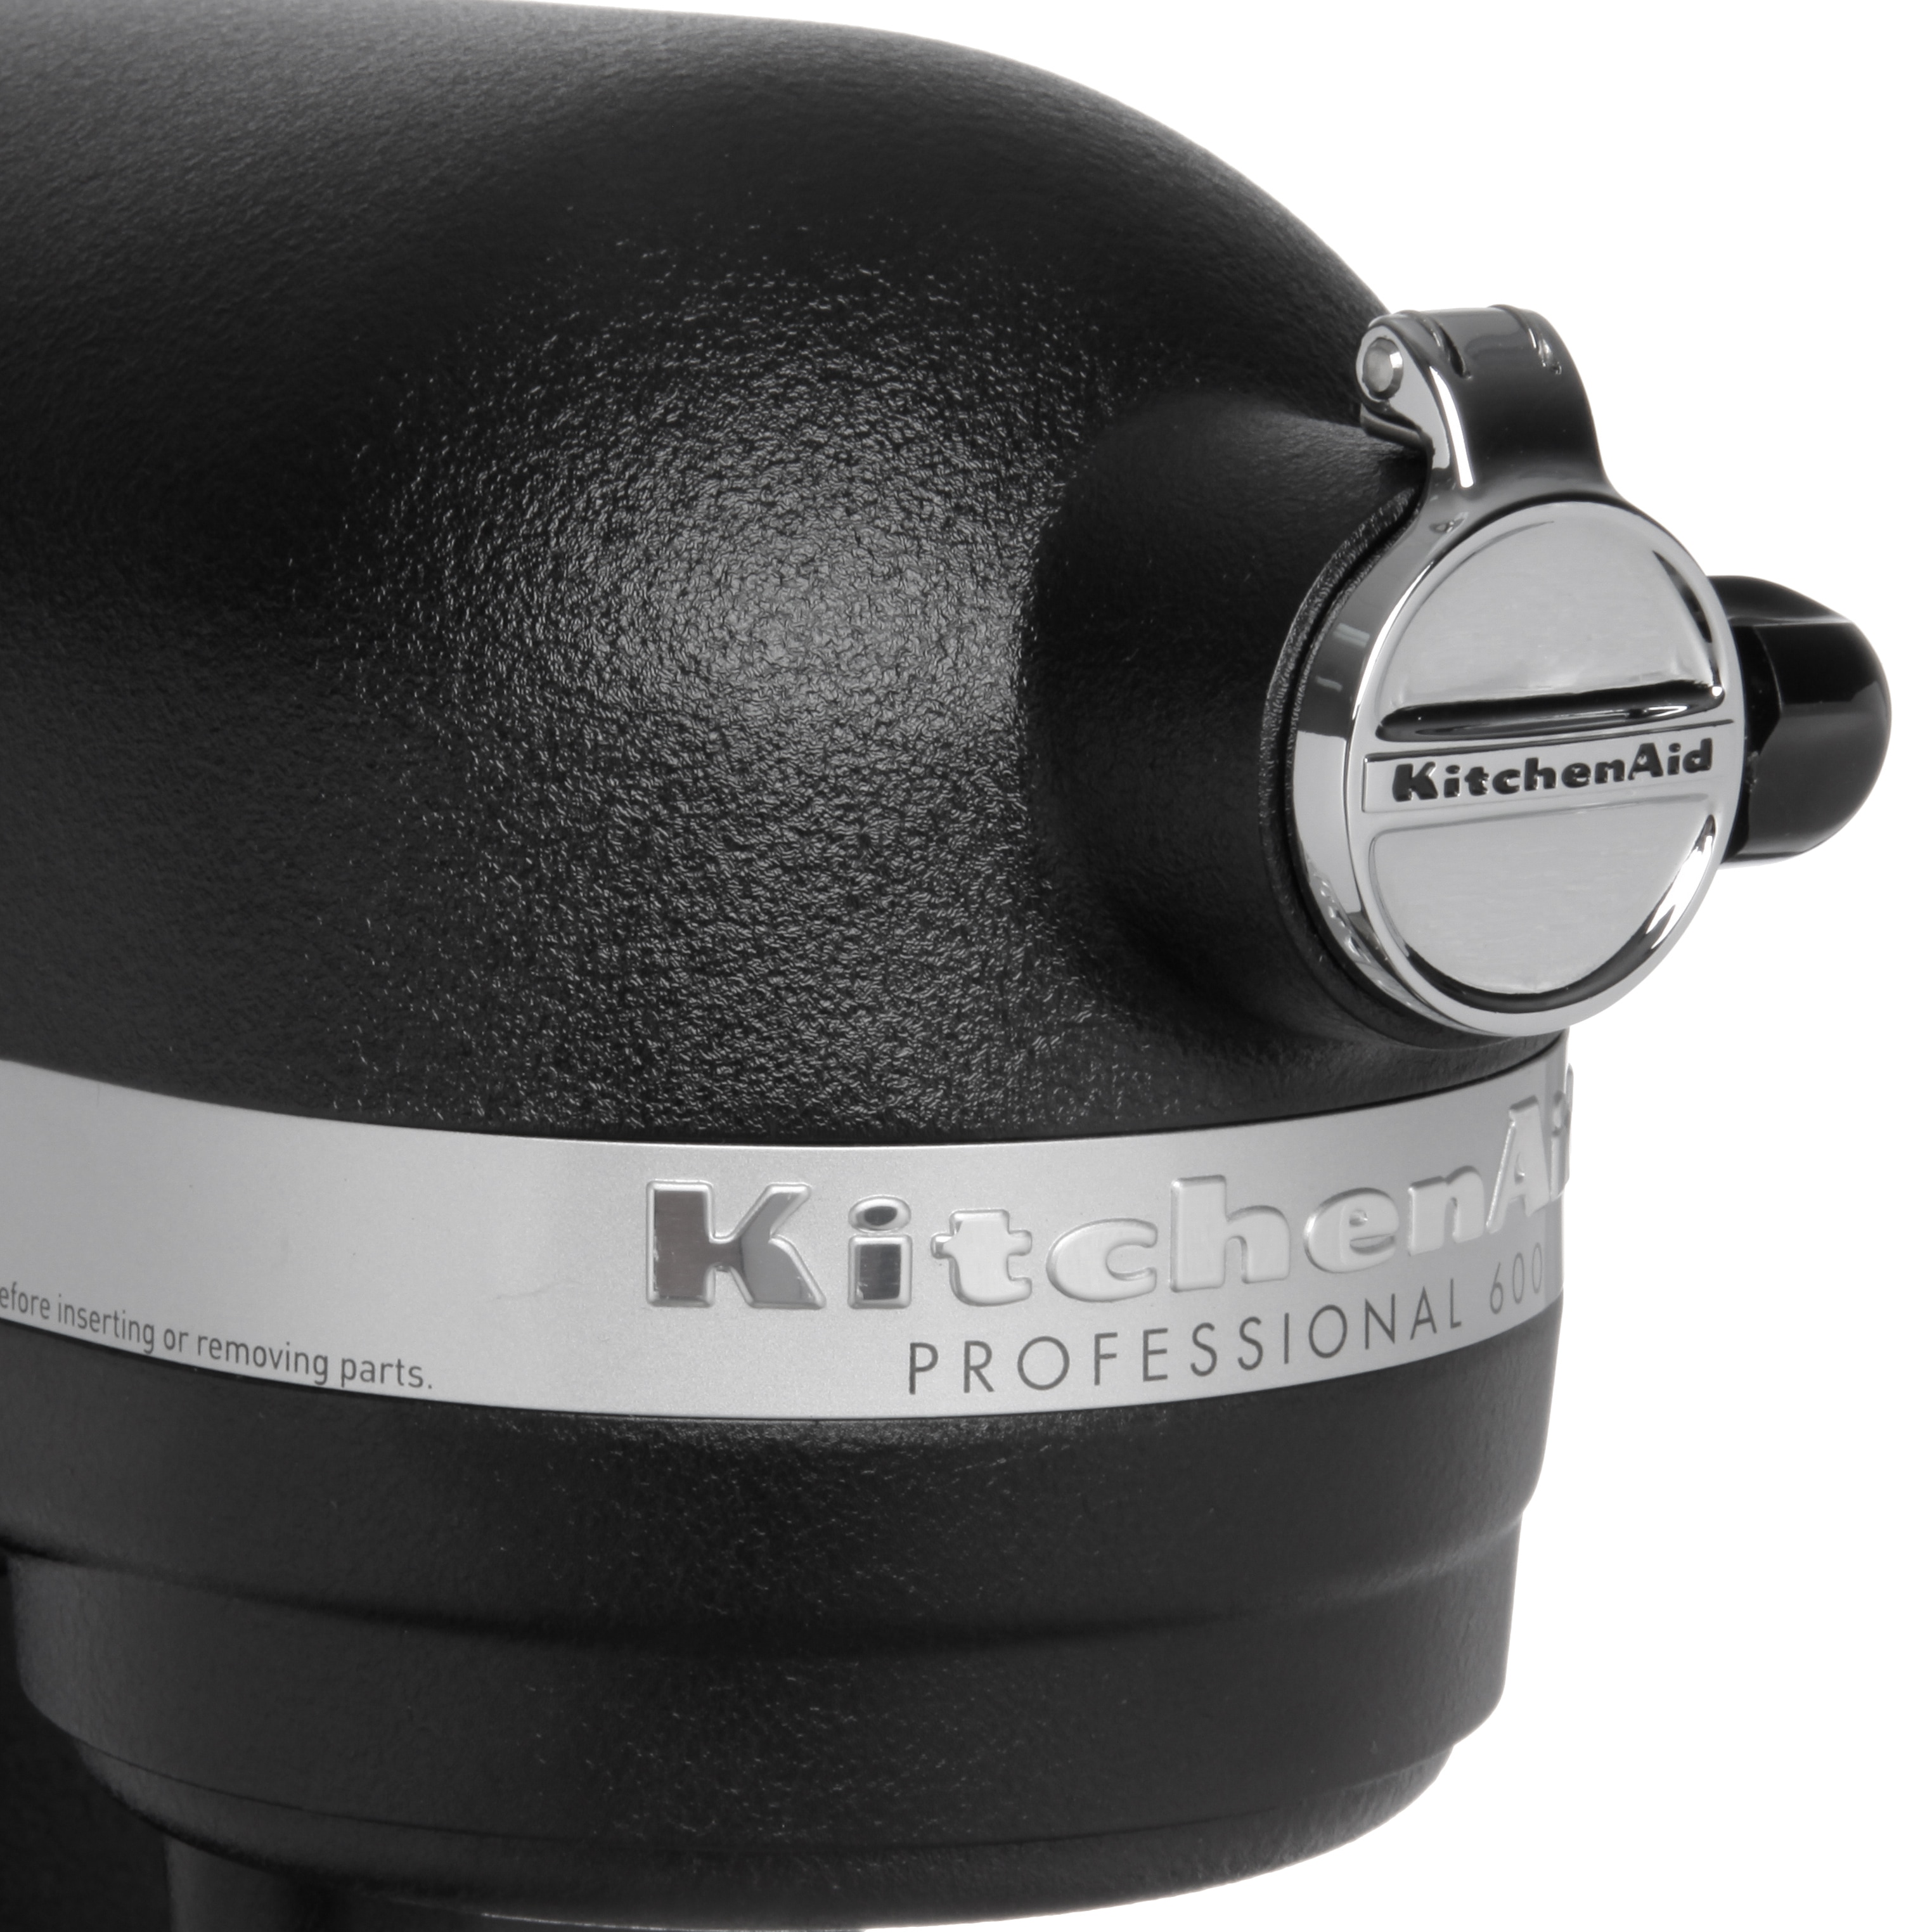 RKP26M1XBK by KitchenAid - Refurbished Professional 600™ Series 6